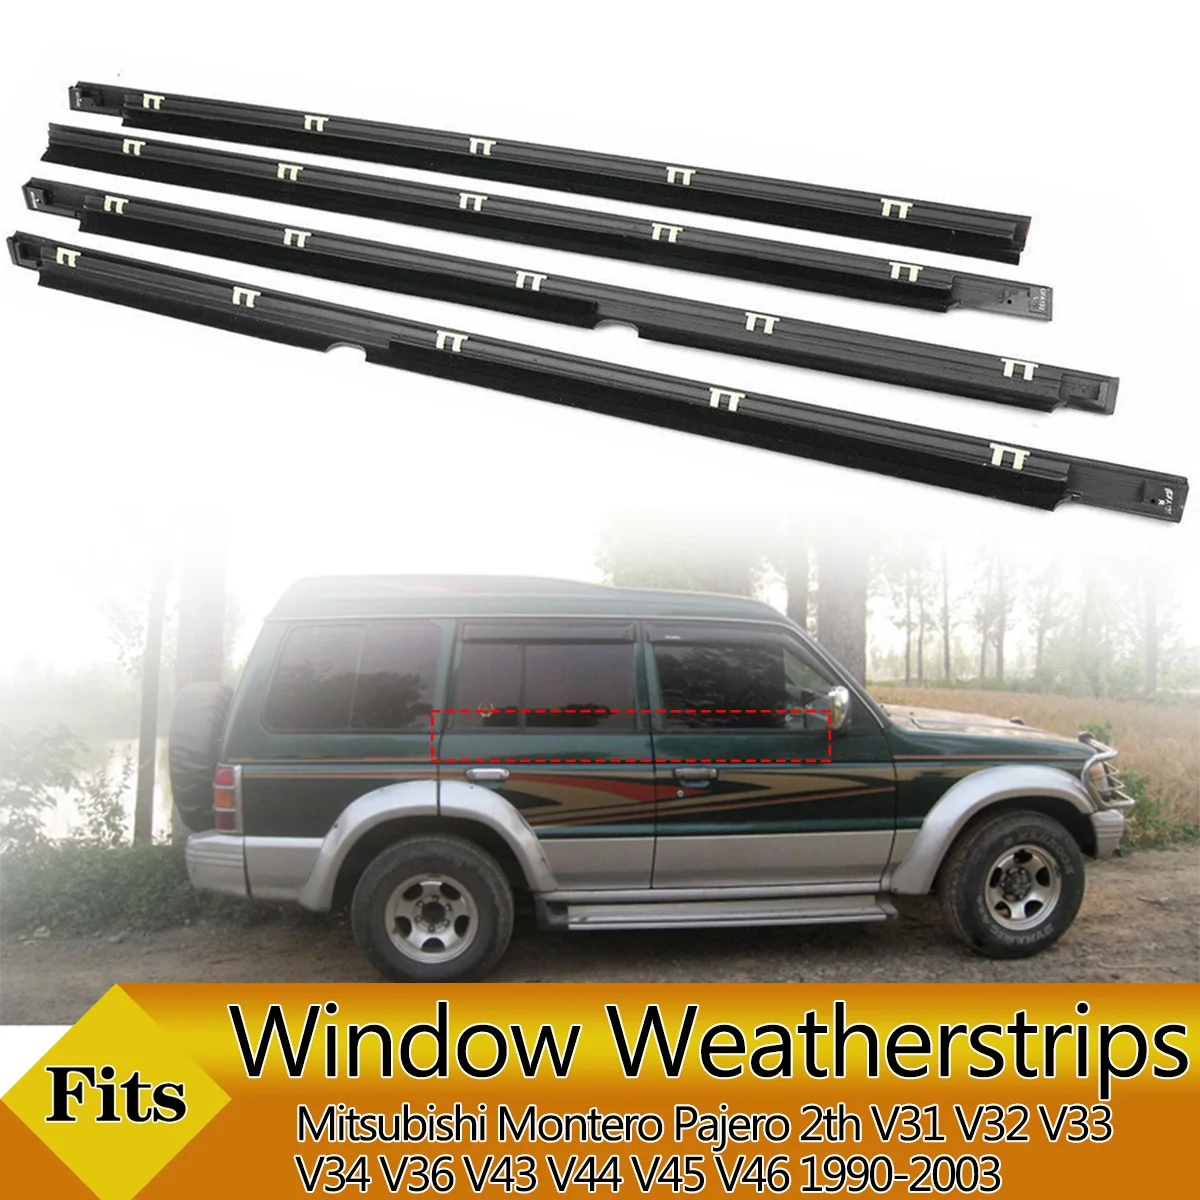 

4PCS Car Outer Door Windows Rubber Weatherstrip For Mitsubishi Montero Pajero 2th V31 V32 V33 V34 V36 V43 V44 V45 V46 1990-2003